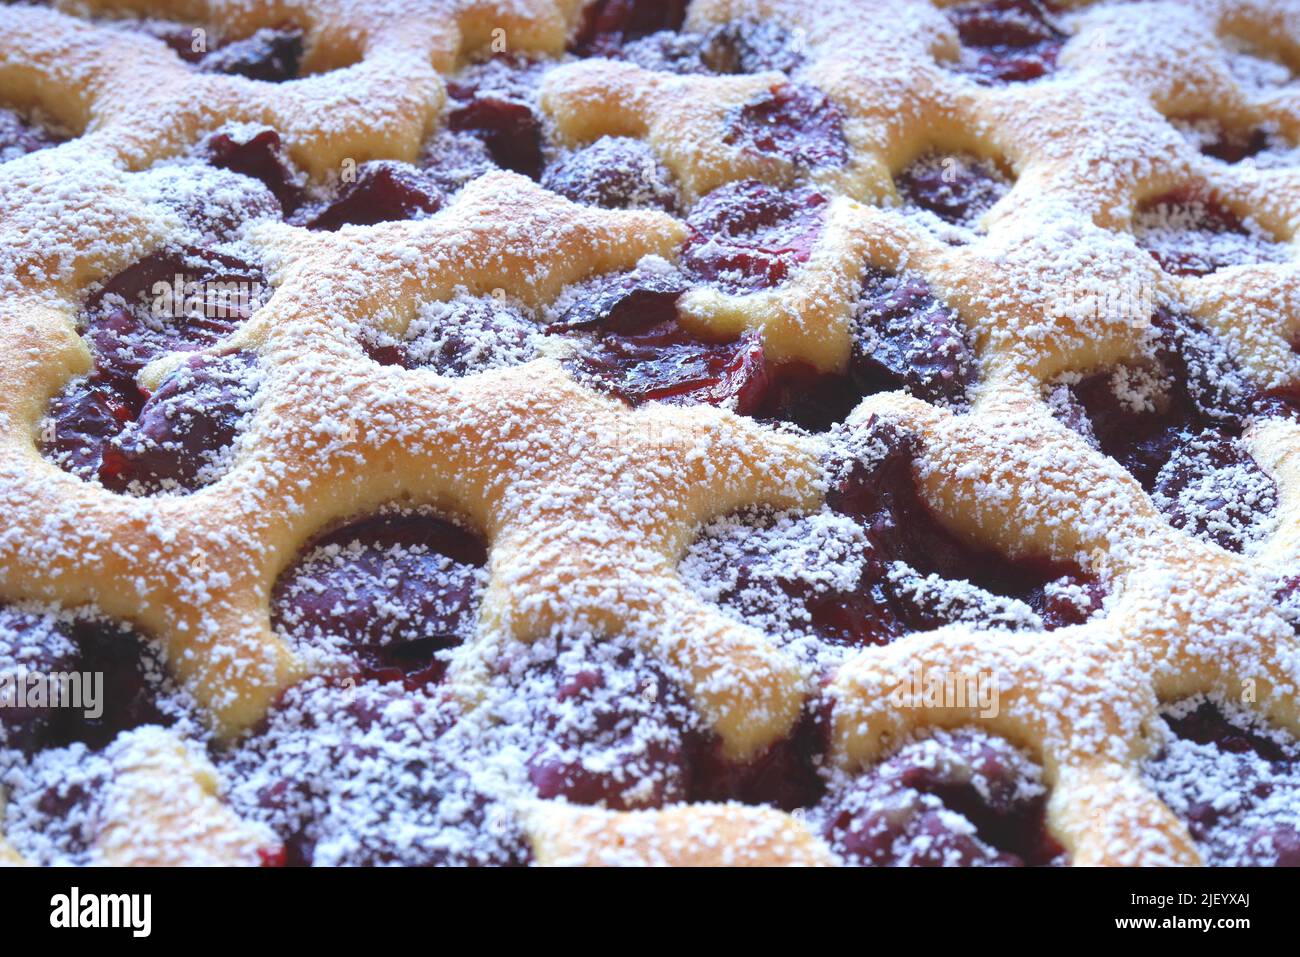 Meggyes pite, meggyes lepeny, tradicional pastel de cerezas ácidas húngaro con azúcar glaseado Foto de stock